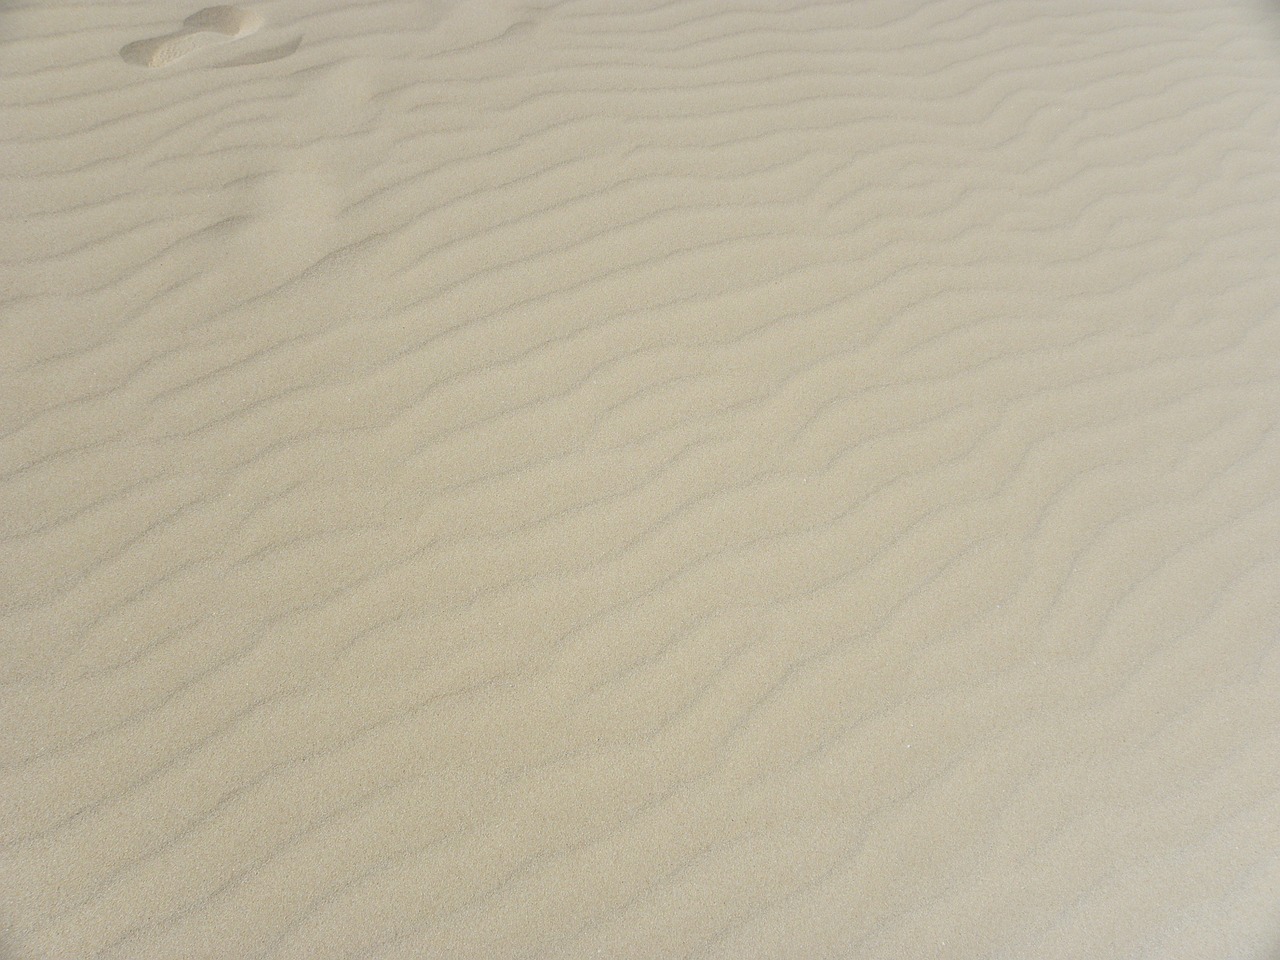 background texture sand free photo